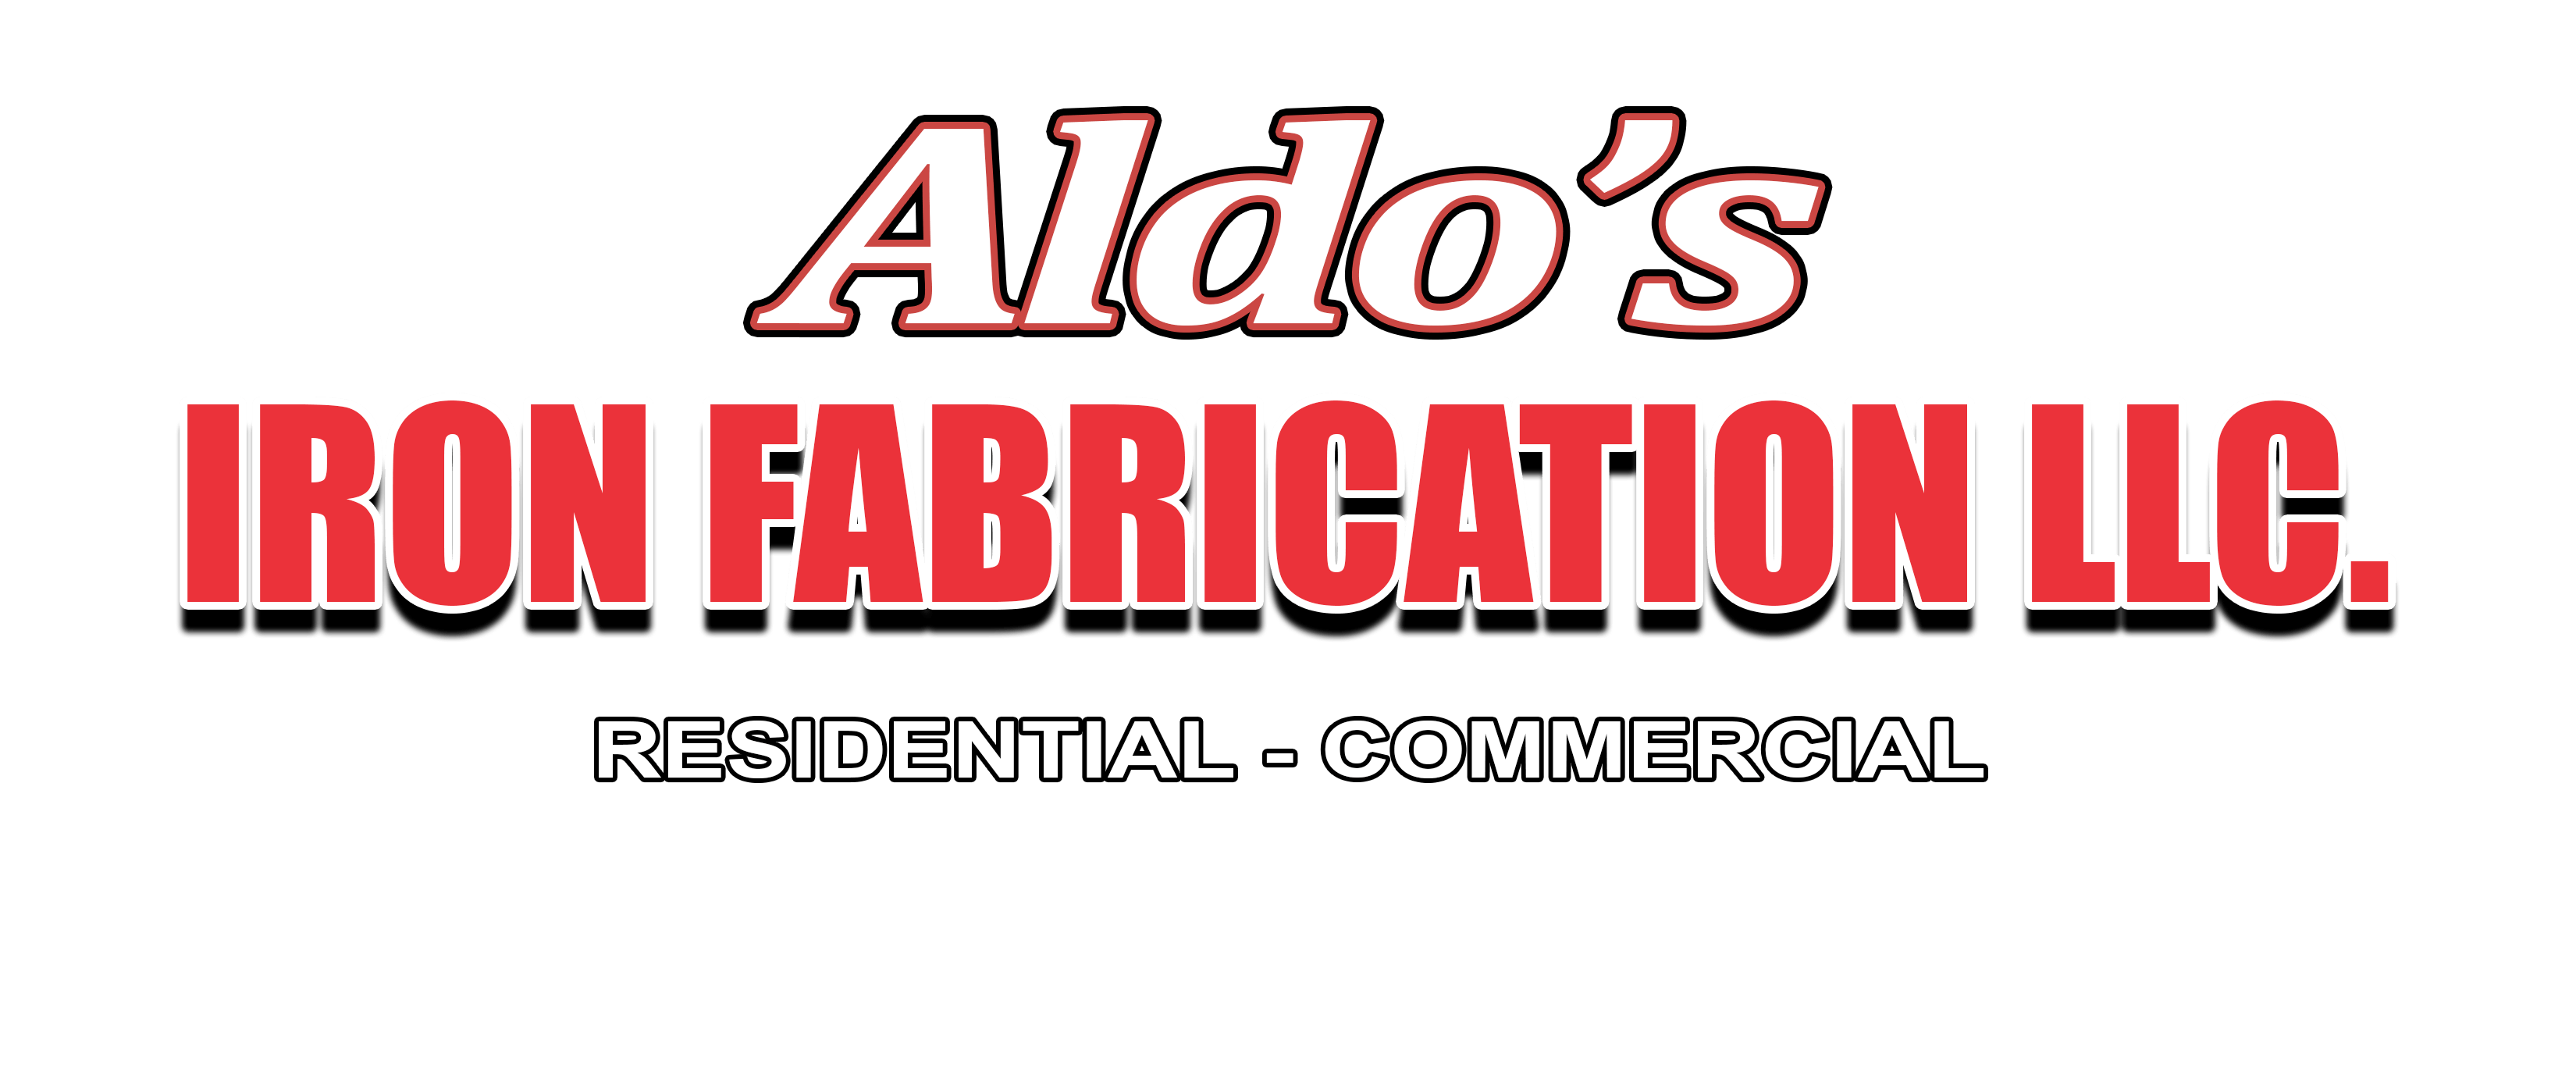 Aldo's Iron Fabrication LLC. Logo